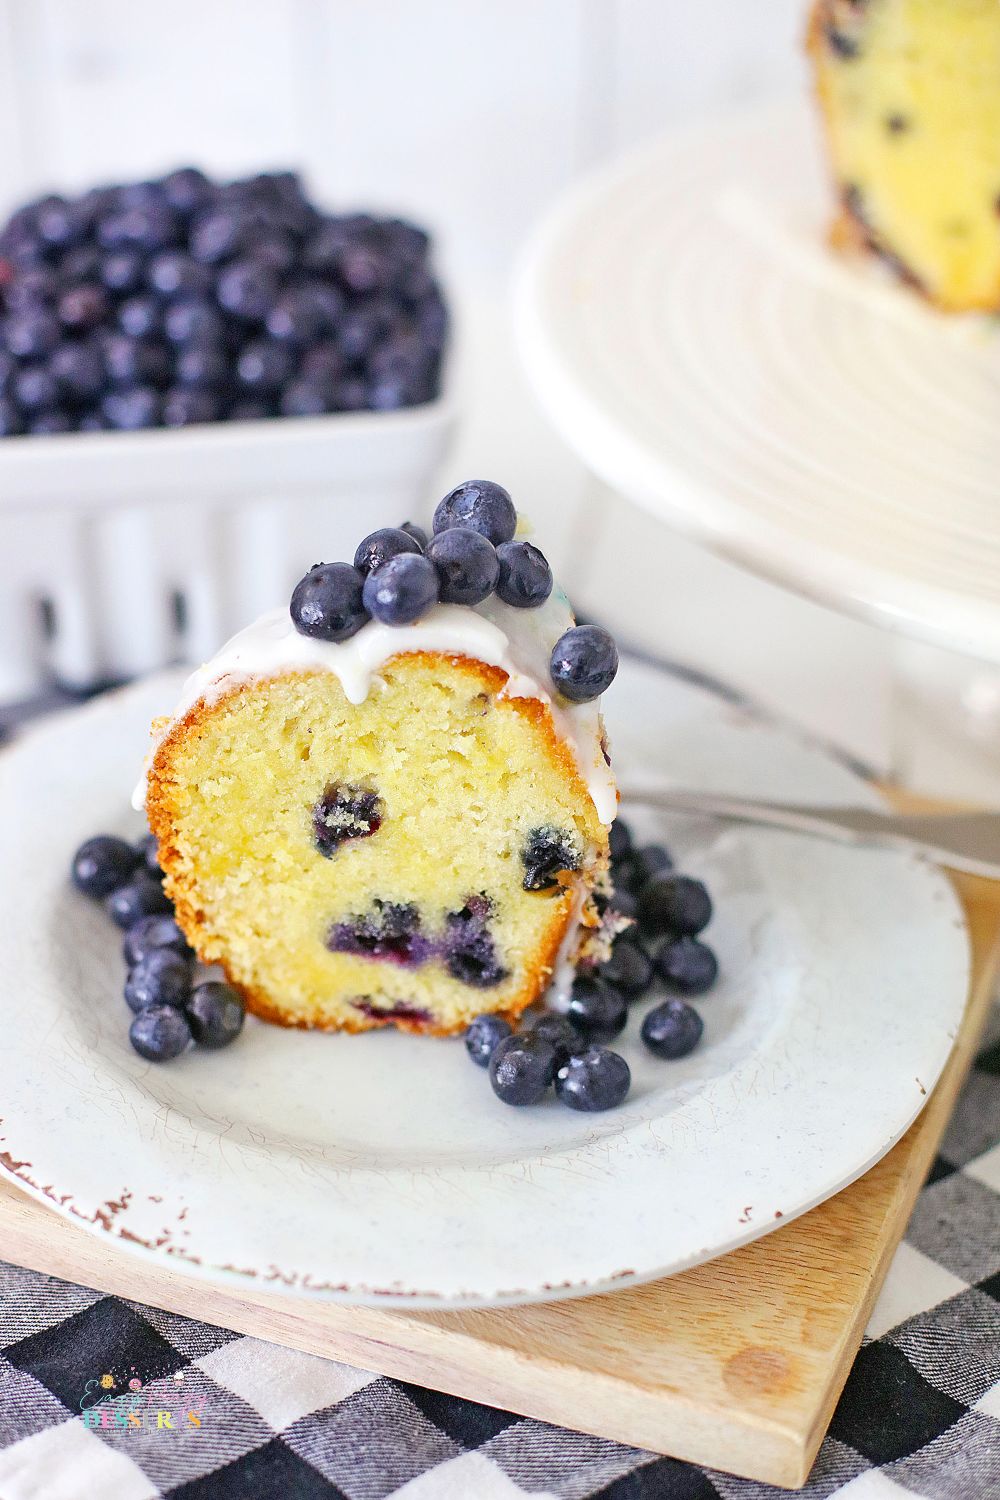 Glazed donut cake with blueberries